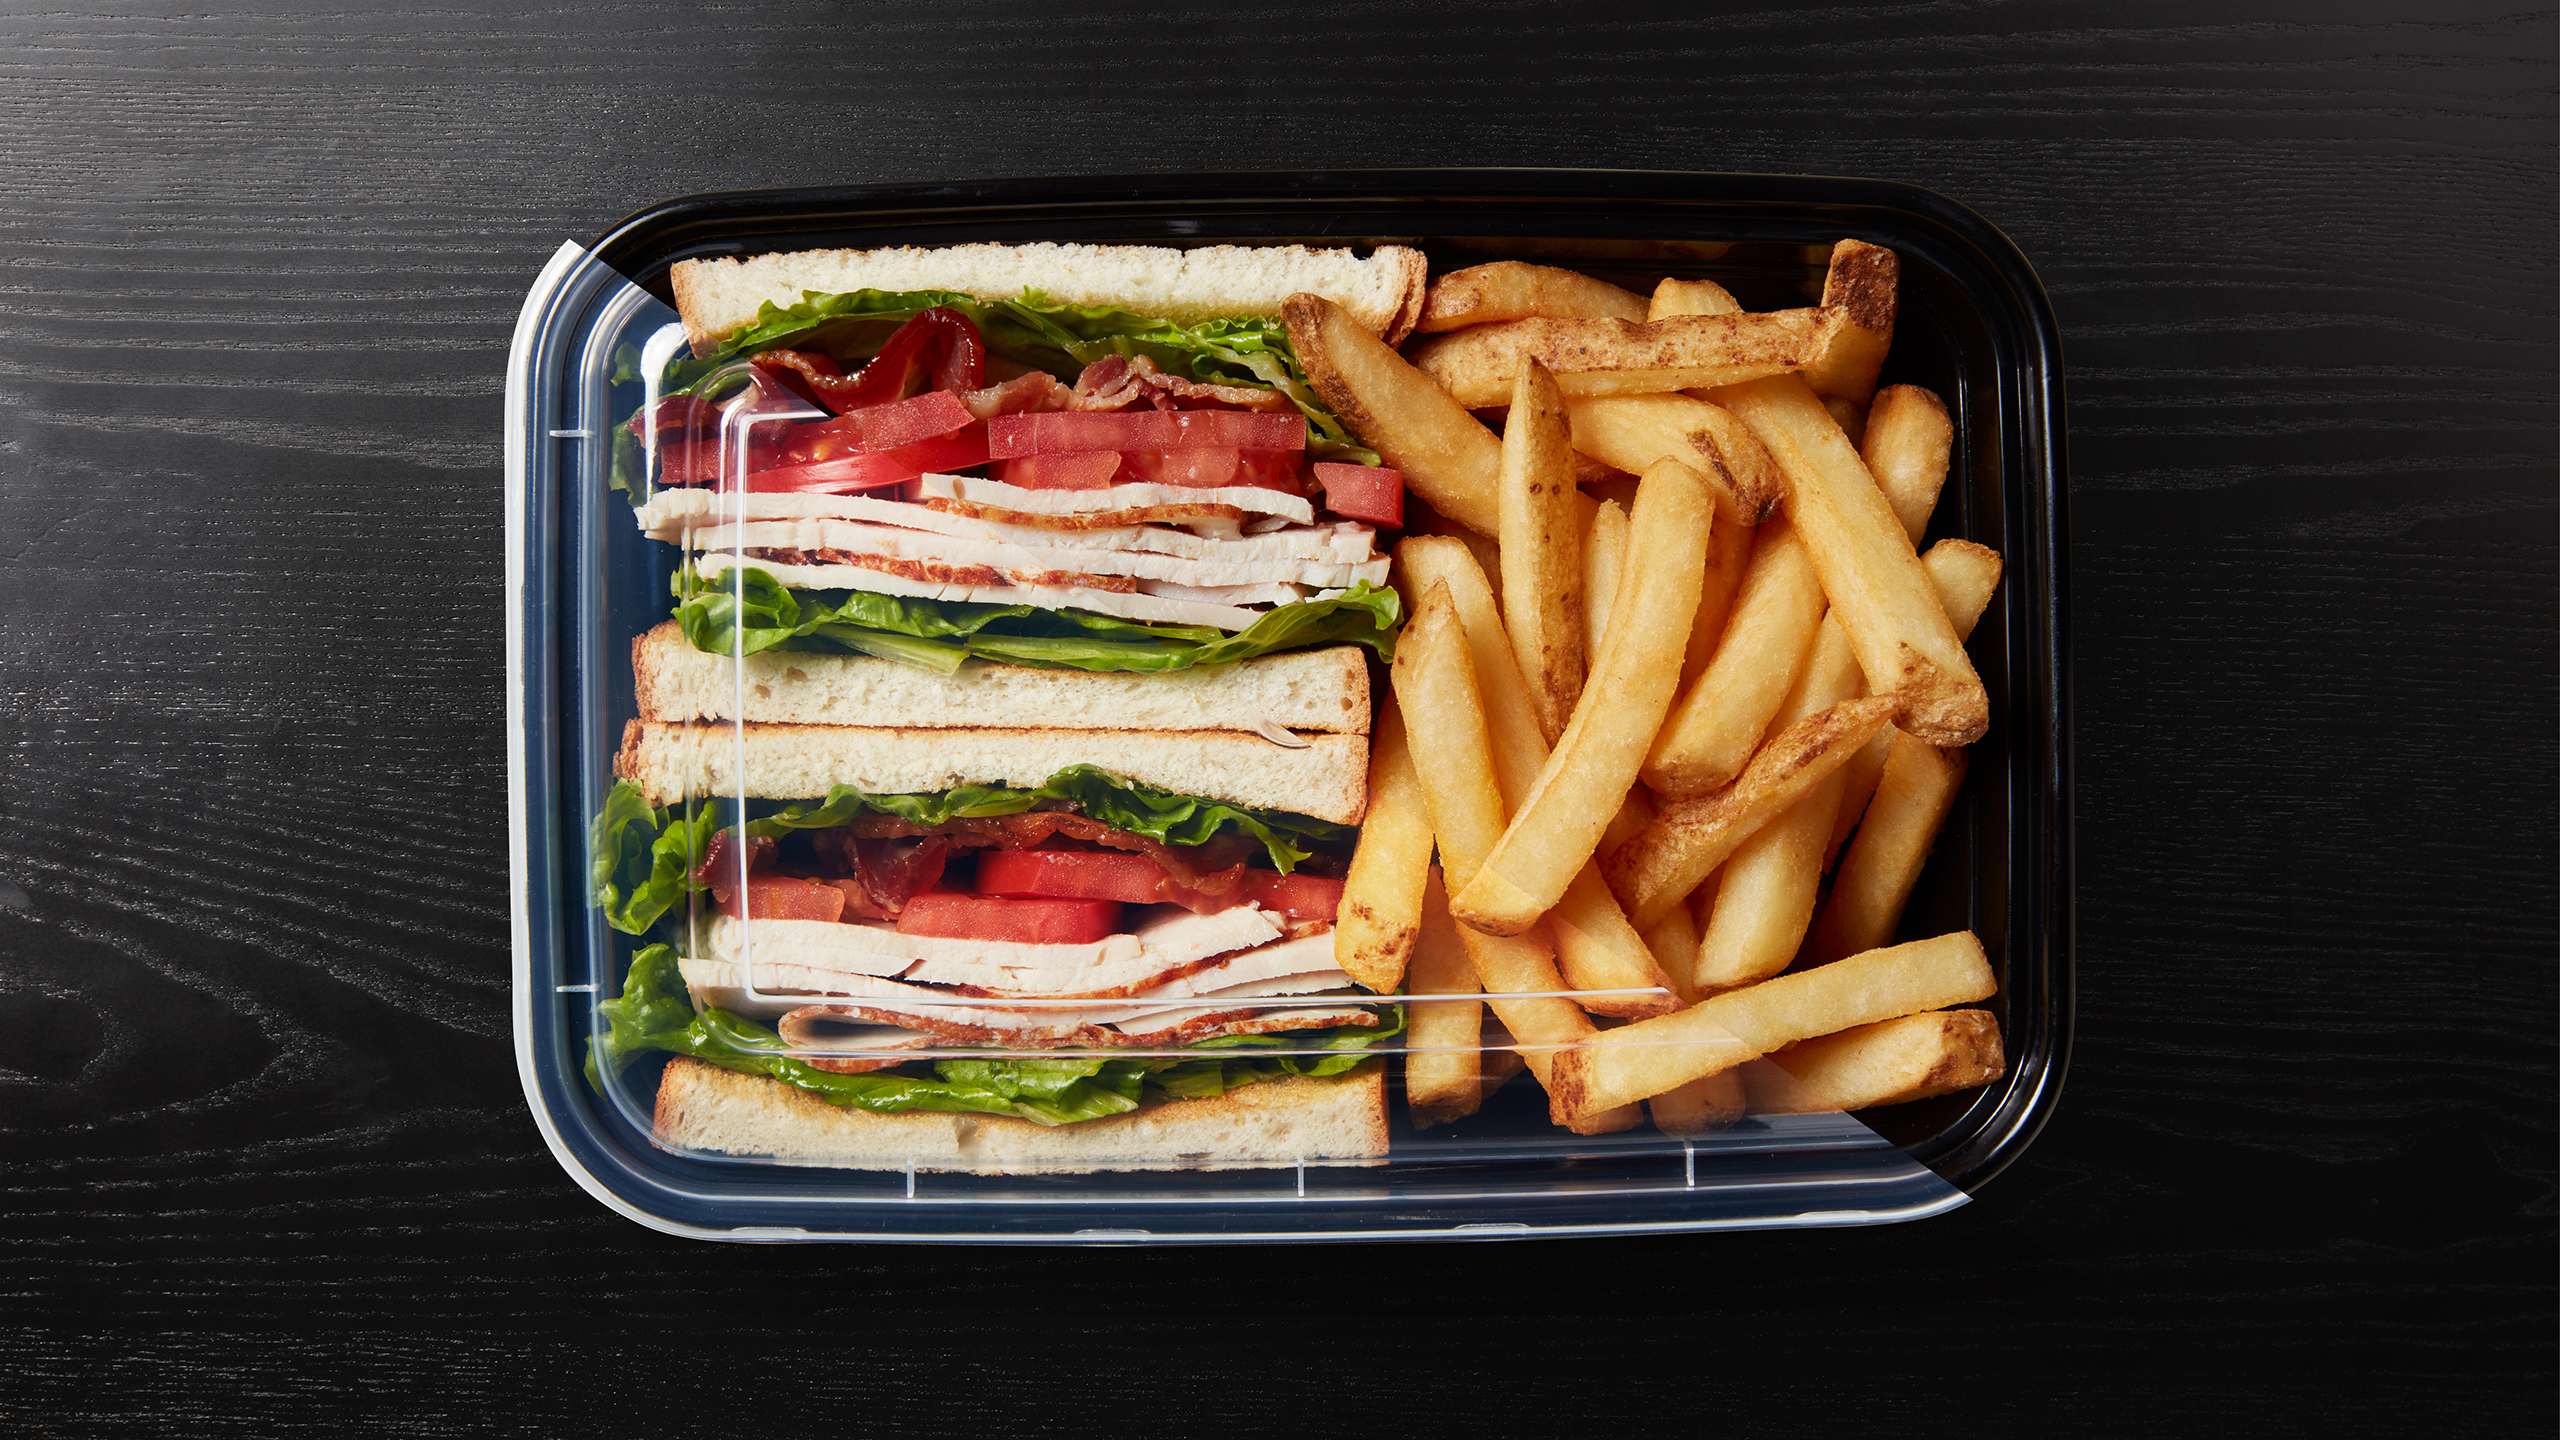 McCain Surecrisp fries and club sandwich